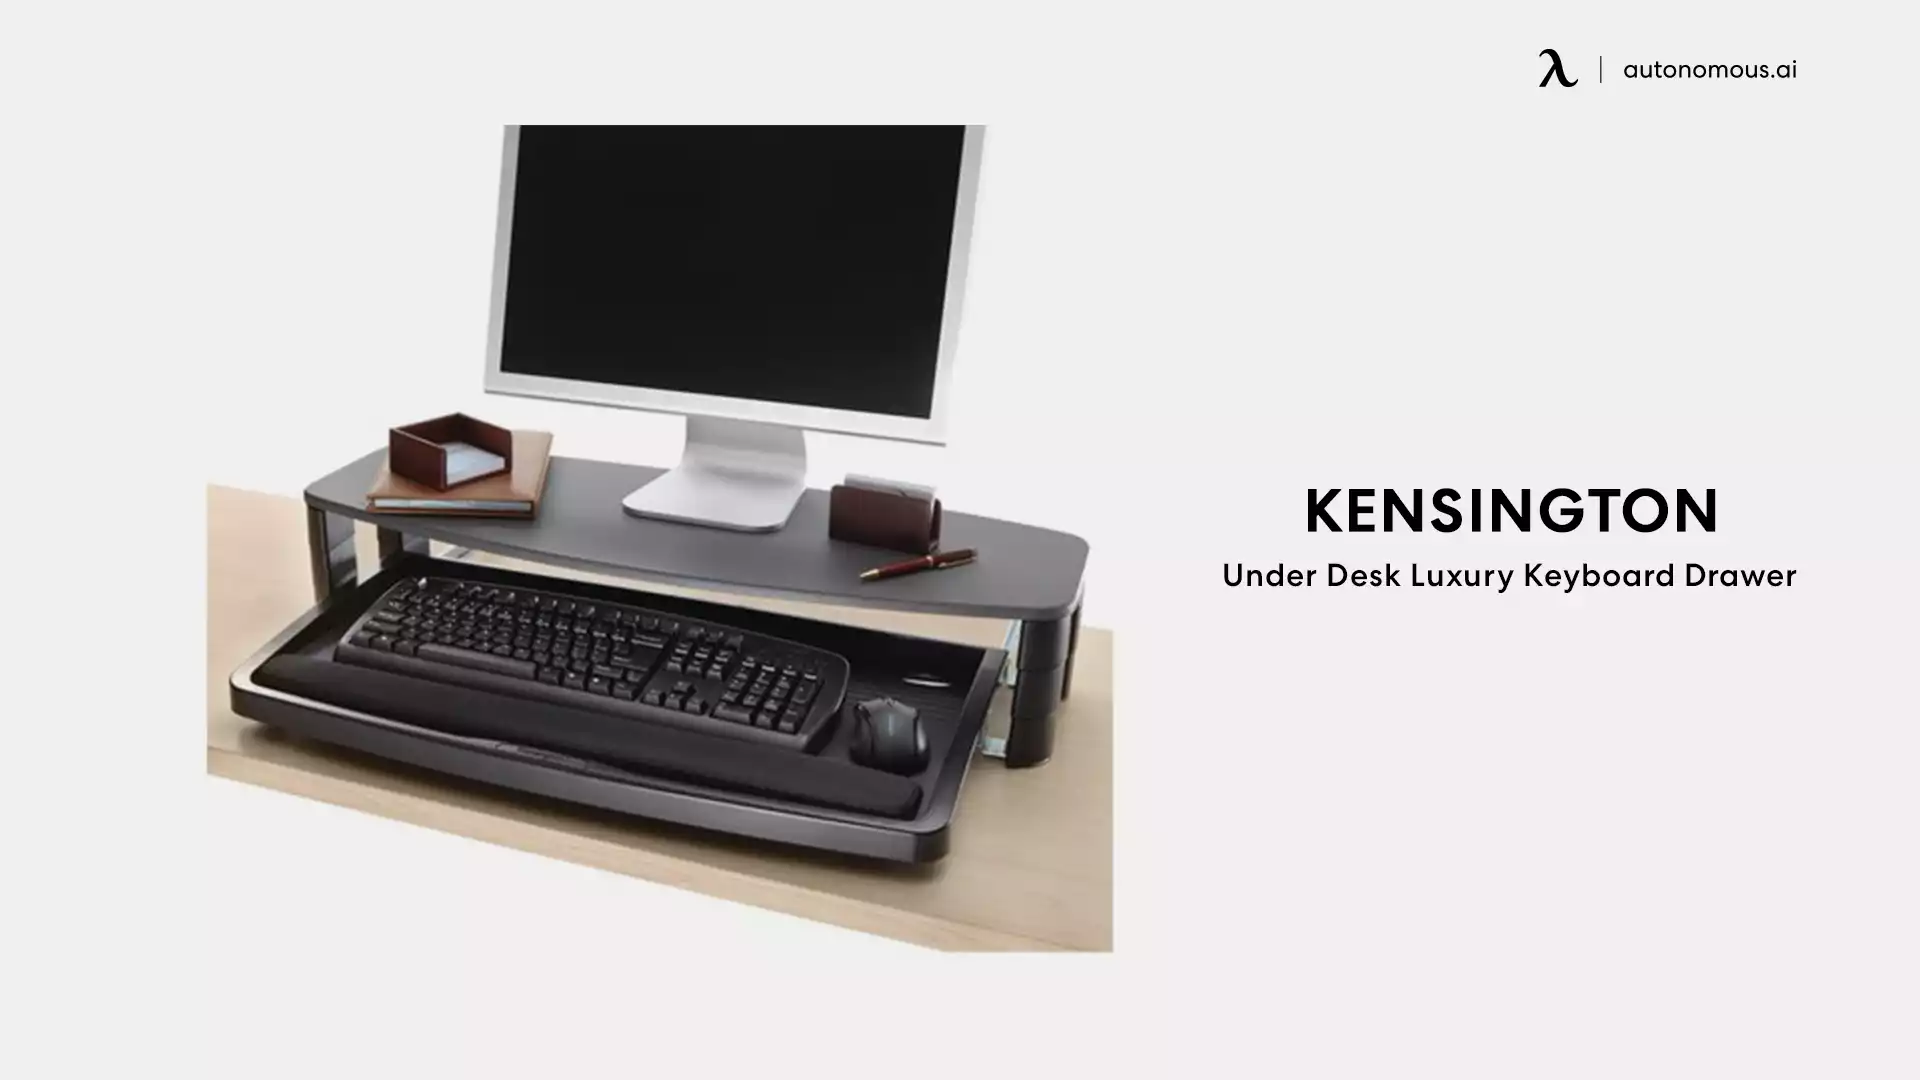 Kensington Under Desk Luxury Keyboard Drawer